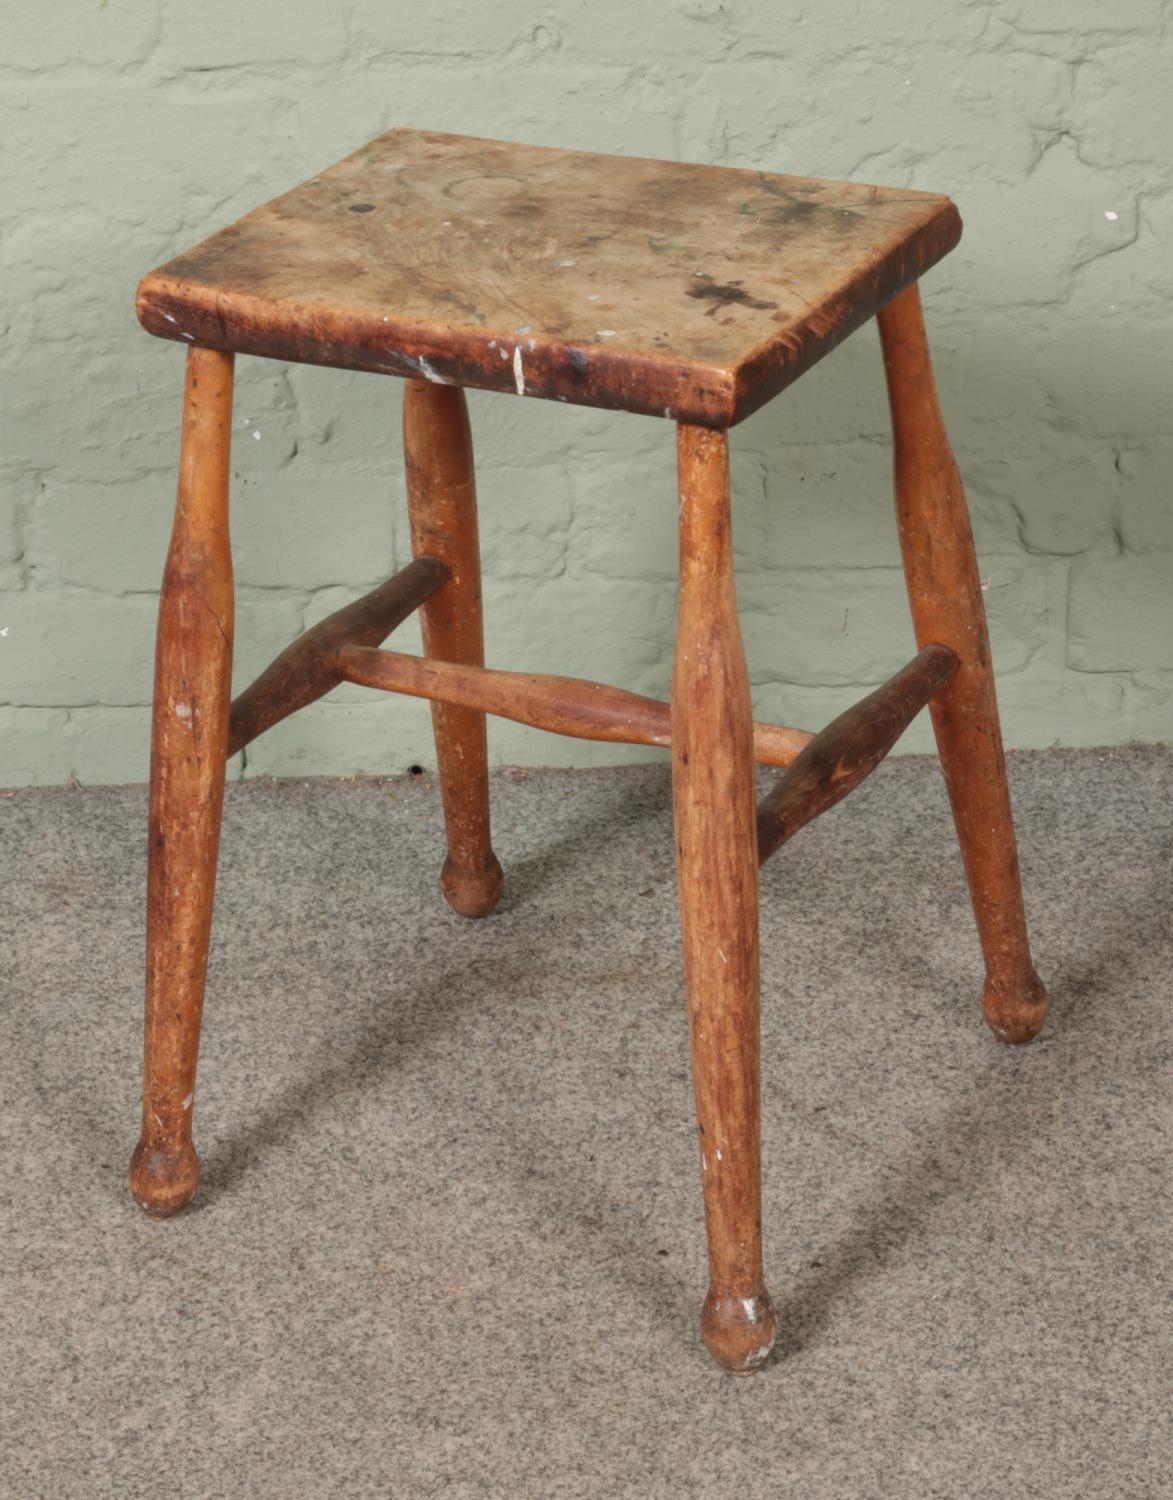 A antique hardwood stool.